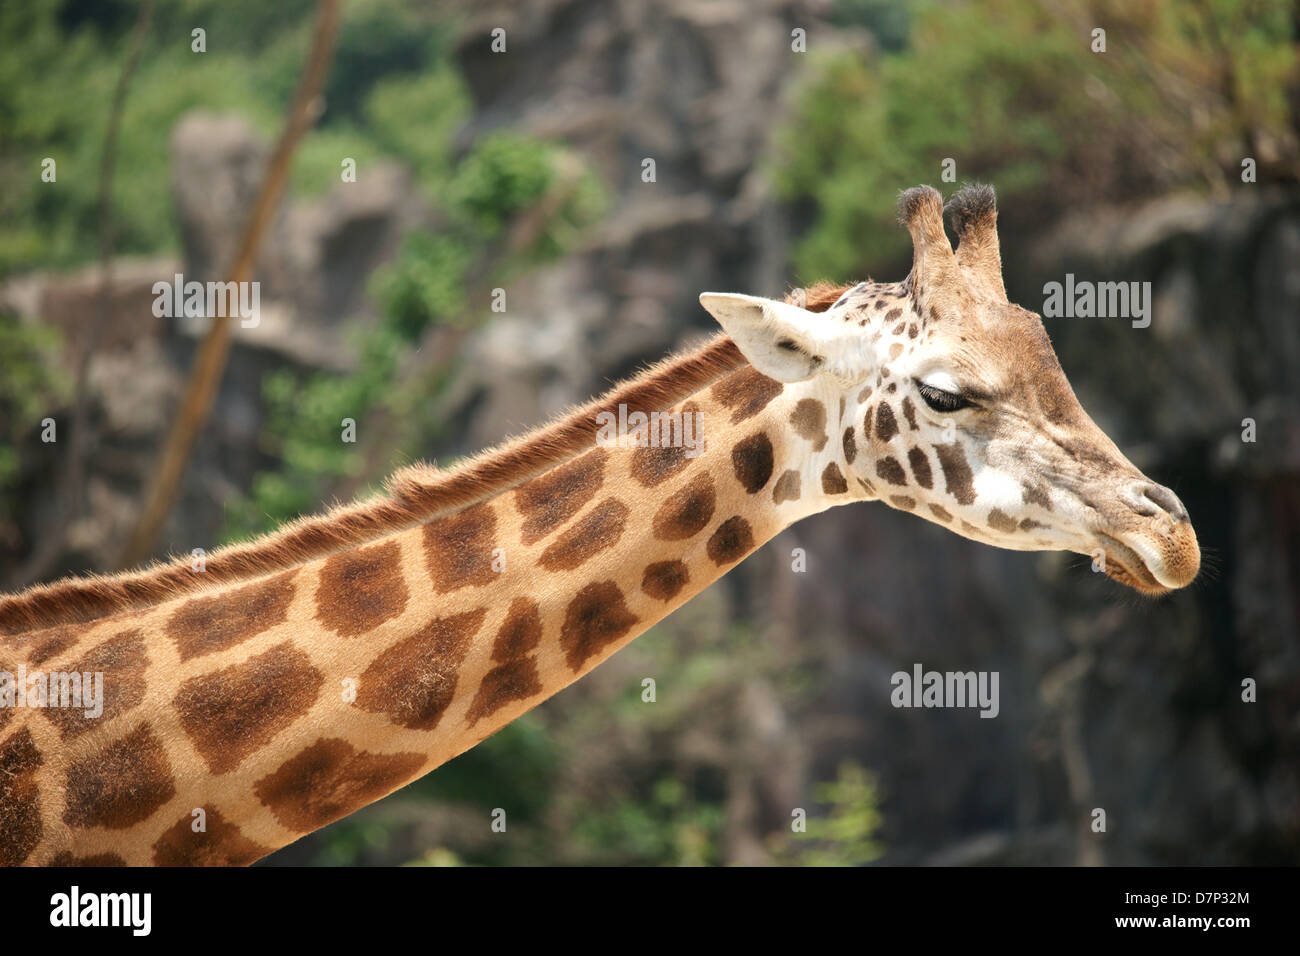 Head shot of a giraffe. Stock Photo